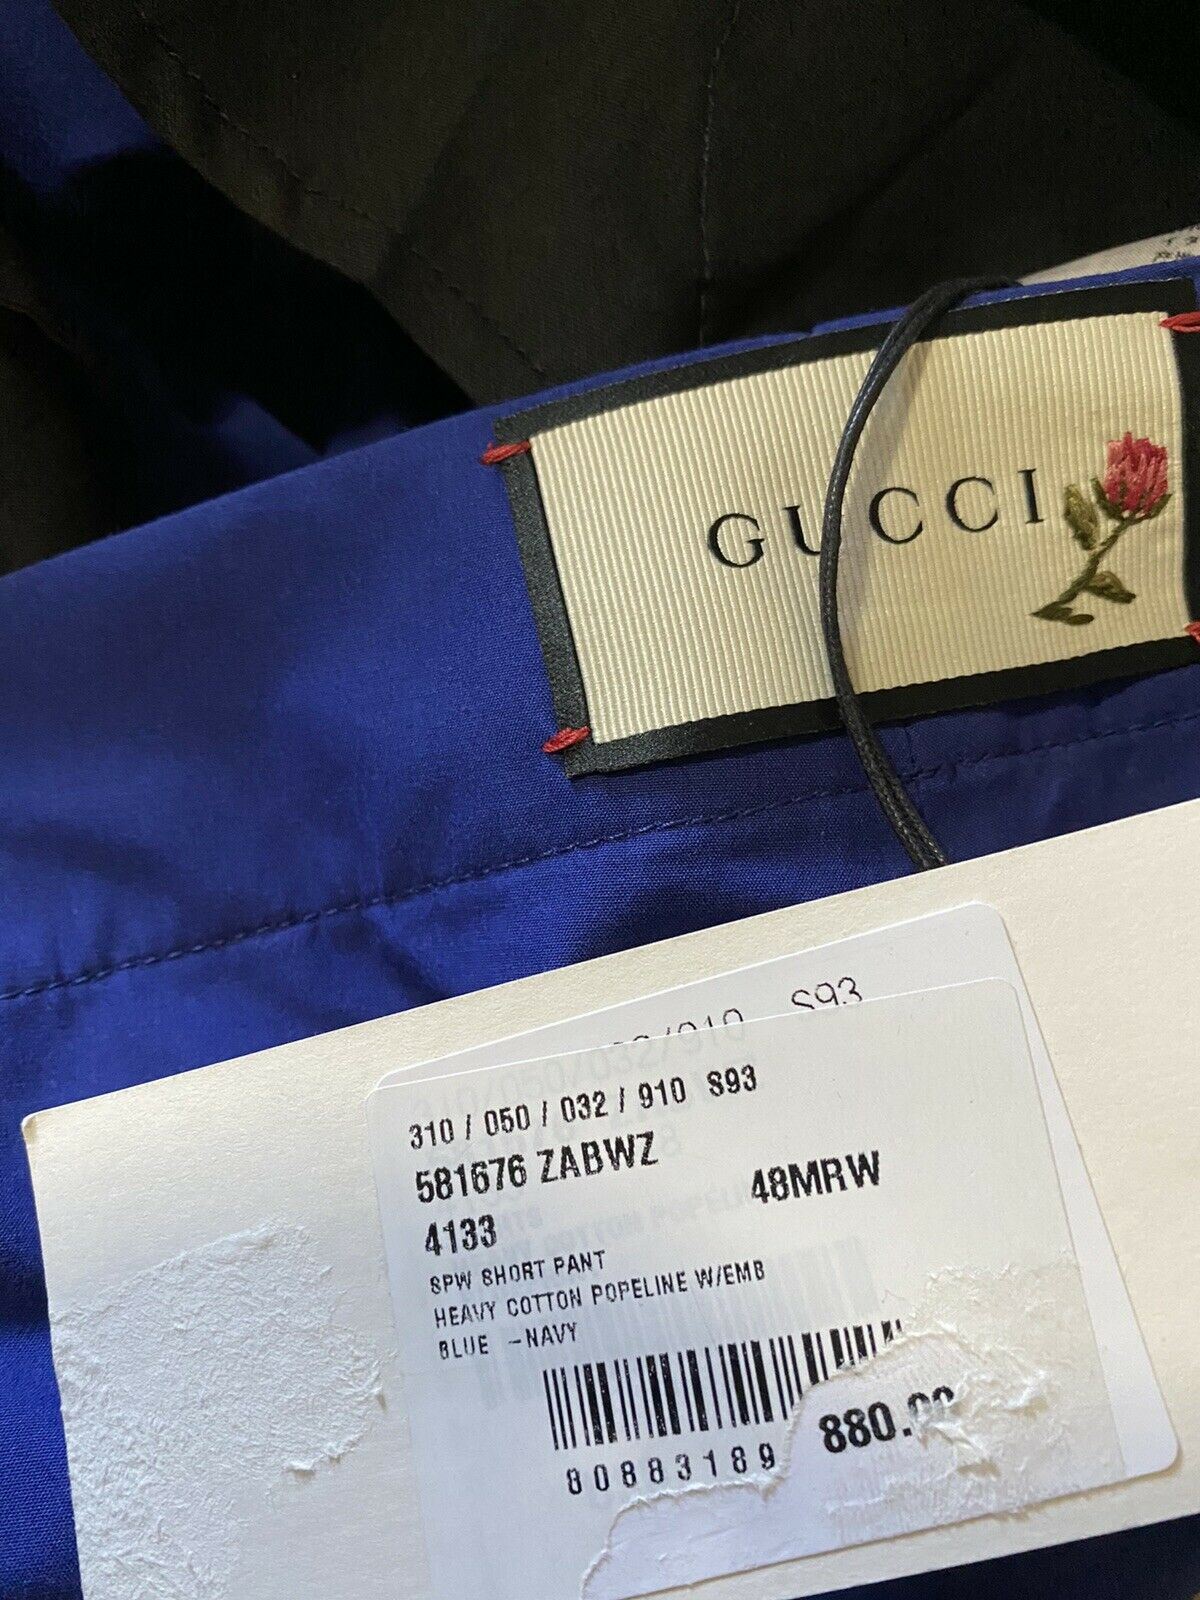 Neu mit Etikett: 880 $ Gucci kurze Herrenhose, Blau, Größe 32 US (48 Eu), Italien